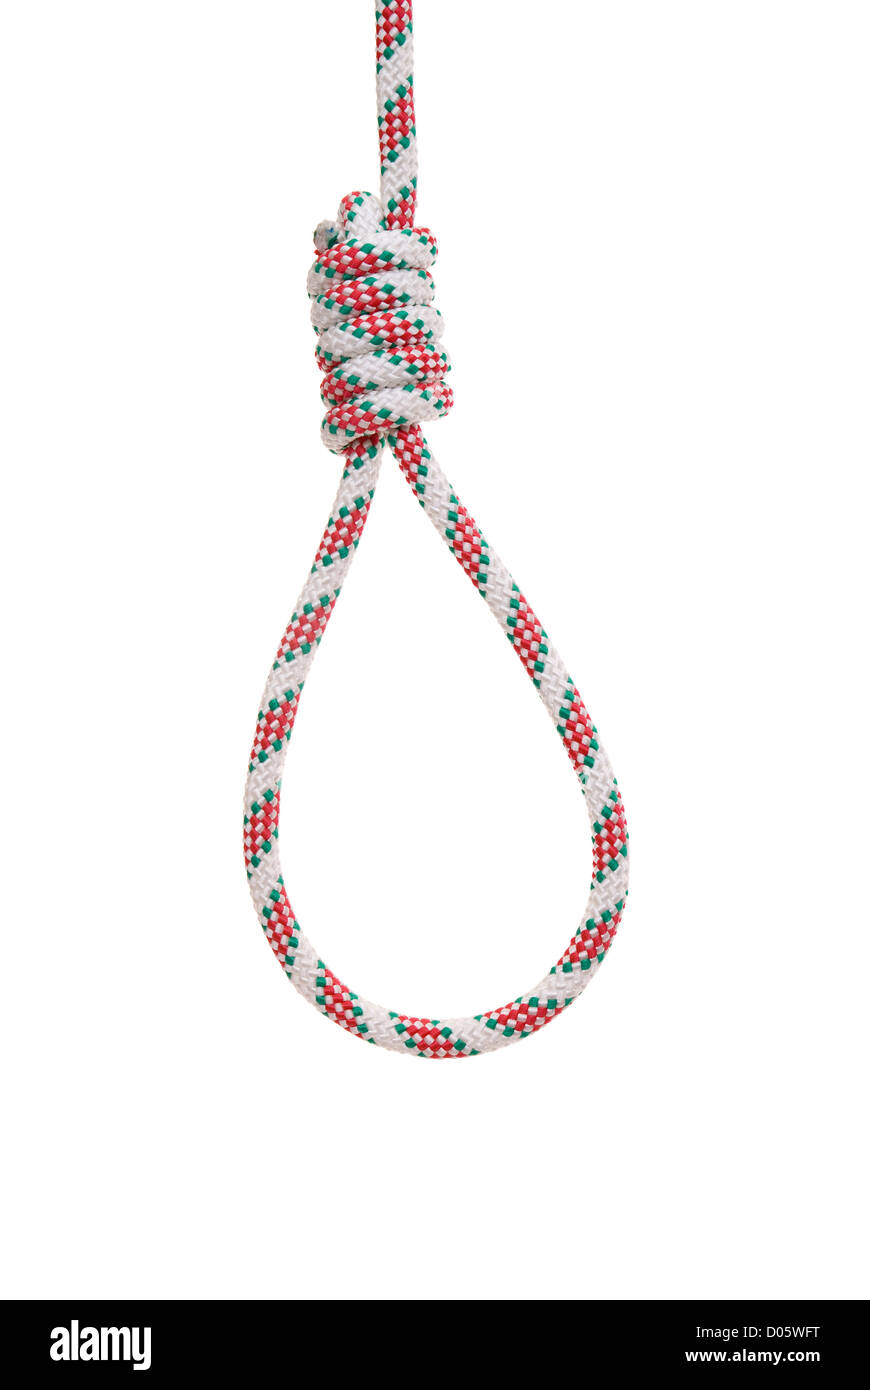 knot hangman's noose Stock Photo - Alamy